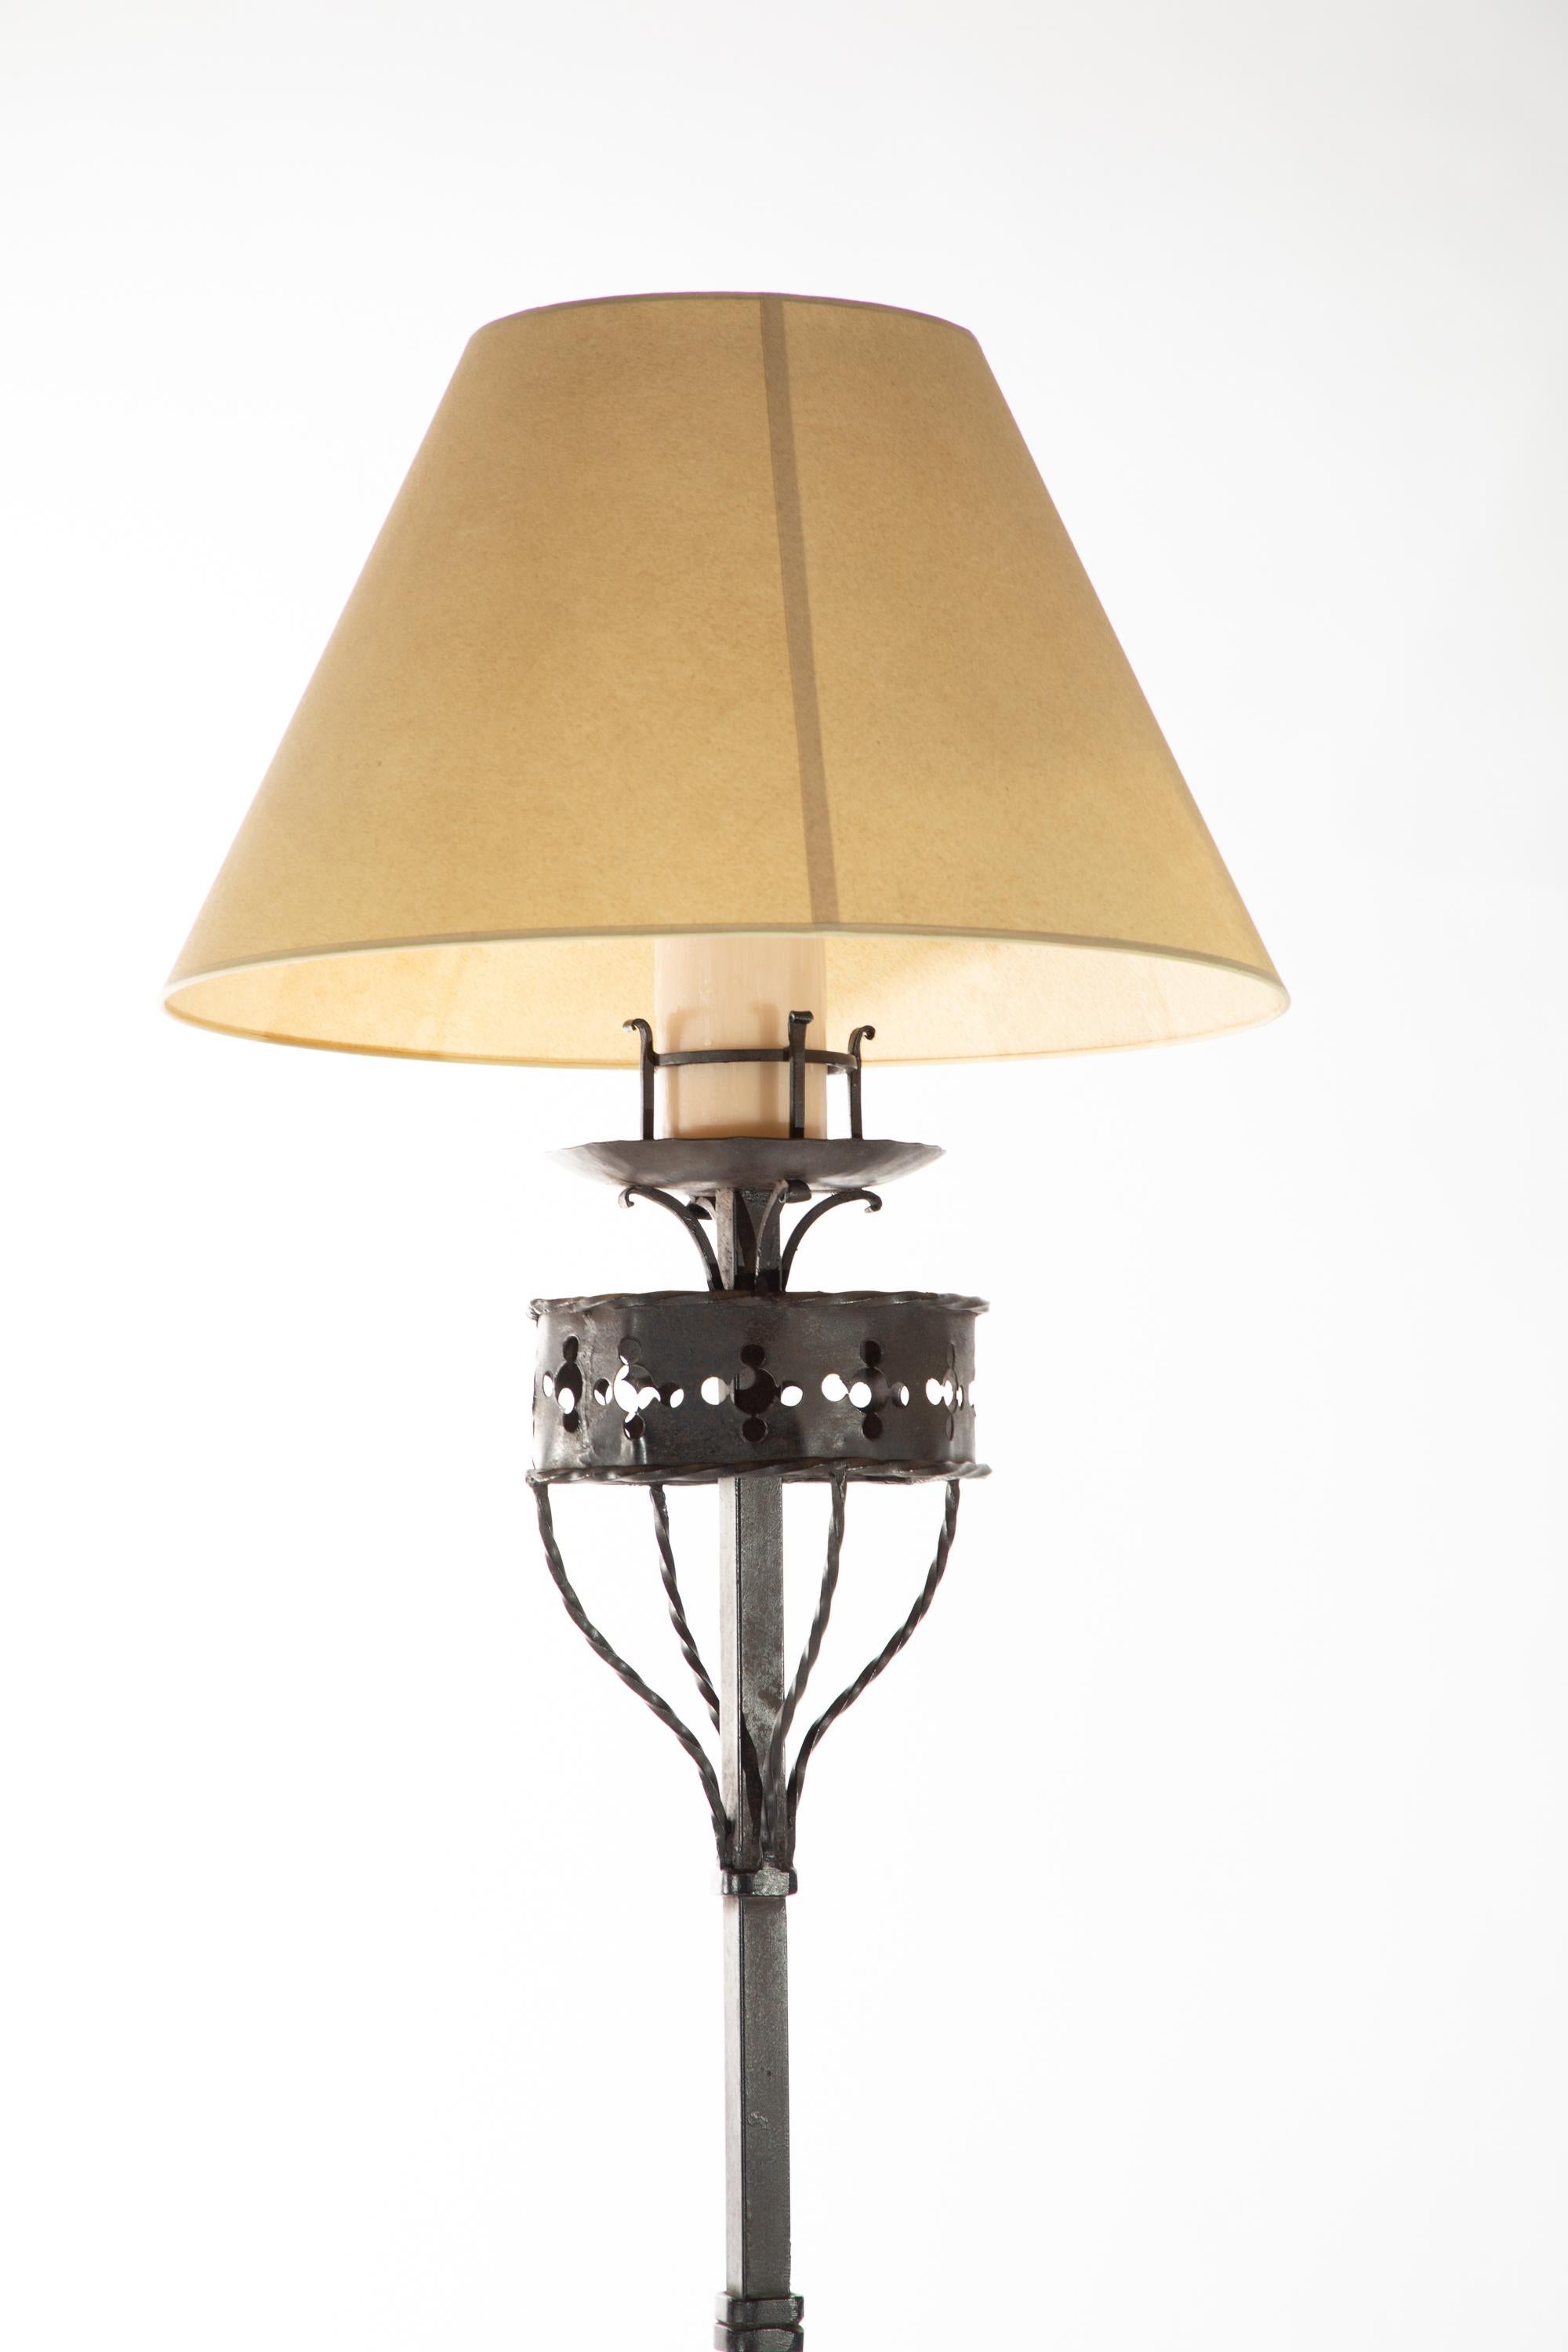 Old Iron finish Zoro floor lamp by Paul Ferrante.

2 light, 75w max per bulb

Includes lampshade